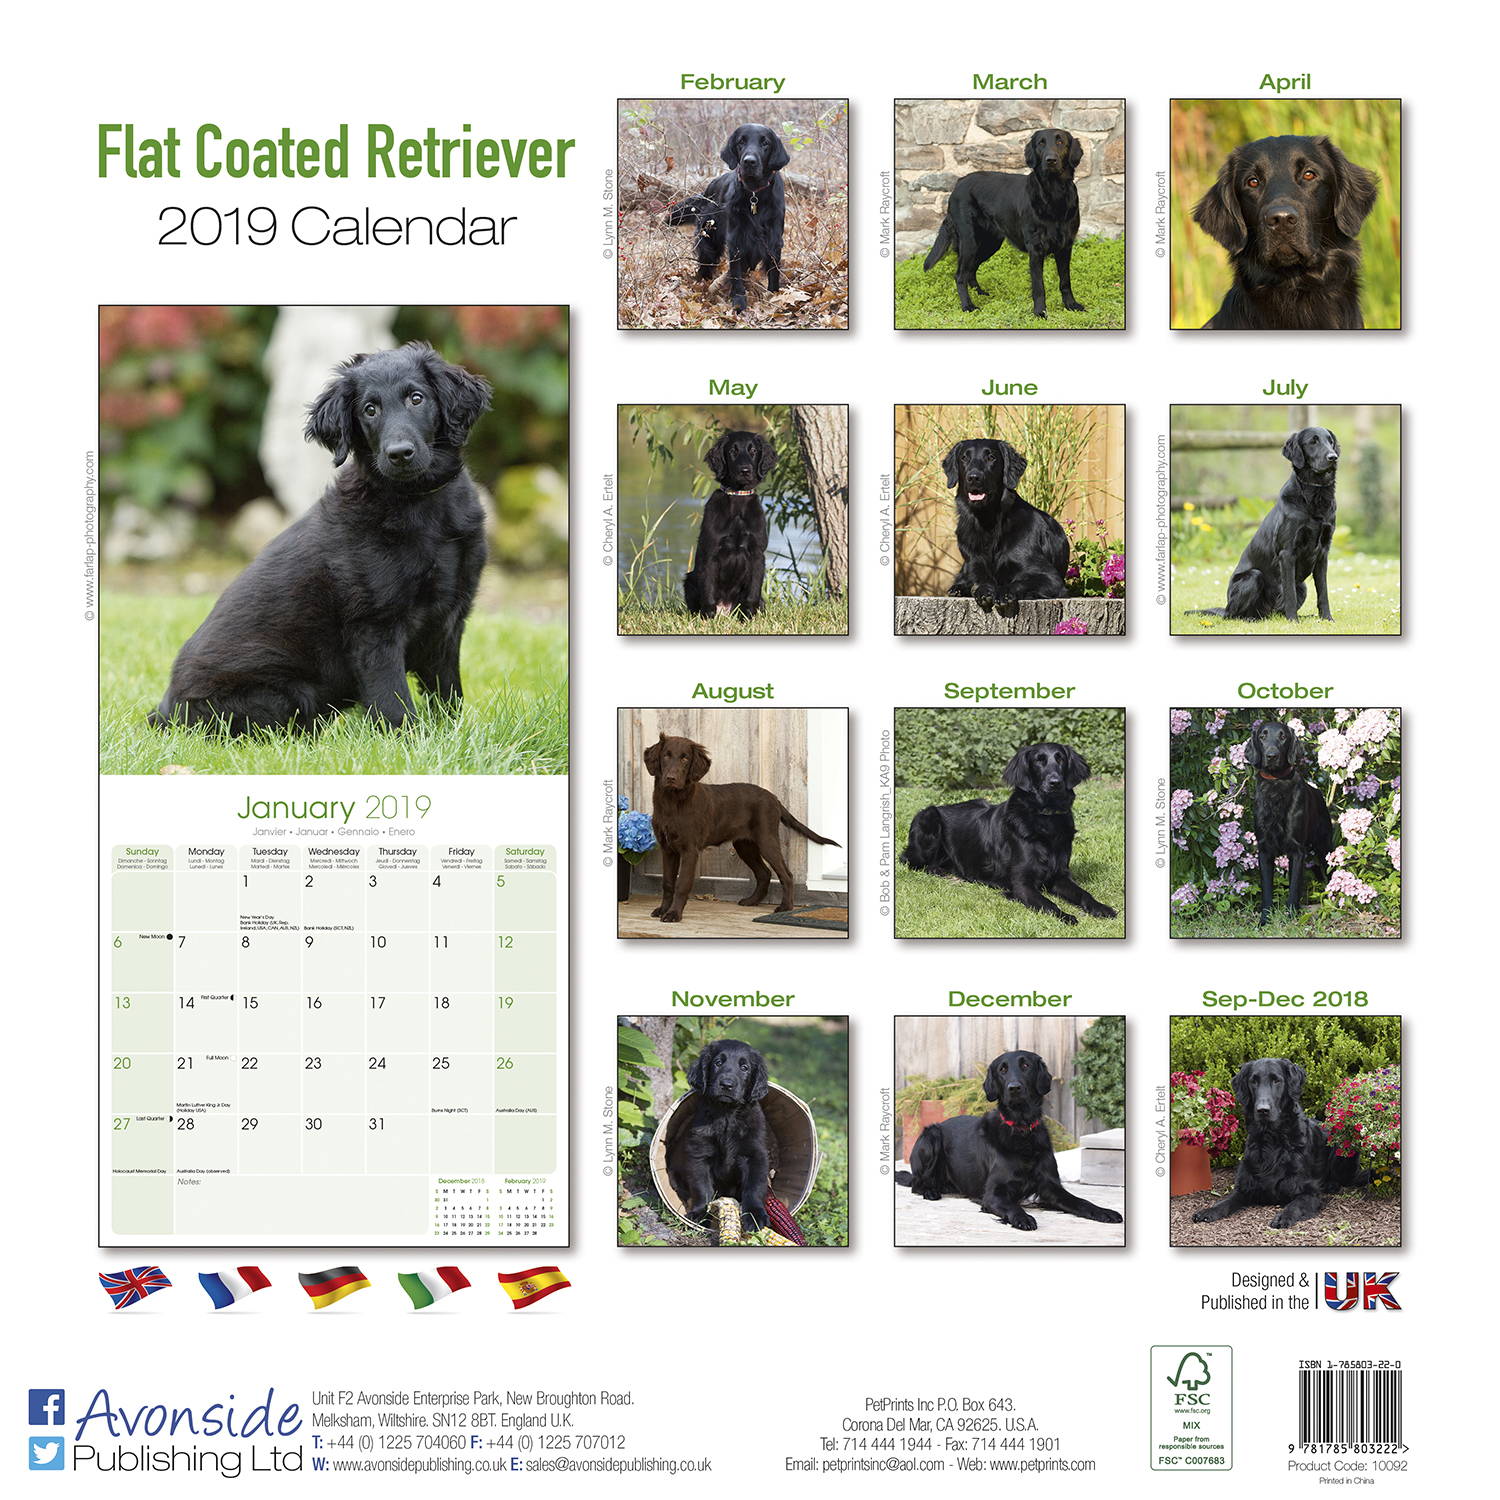 flatcoated-retriever-calendar-dog-breed-megacalendars